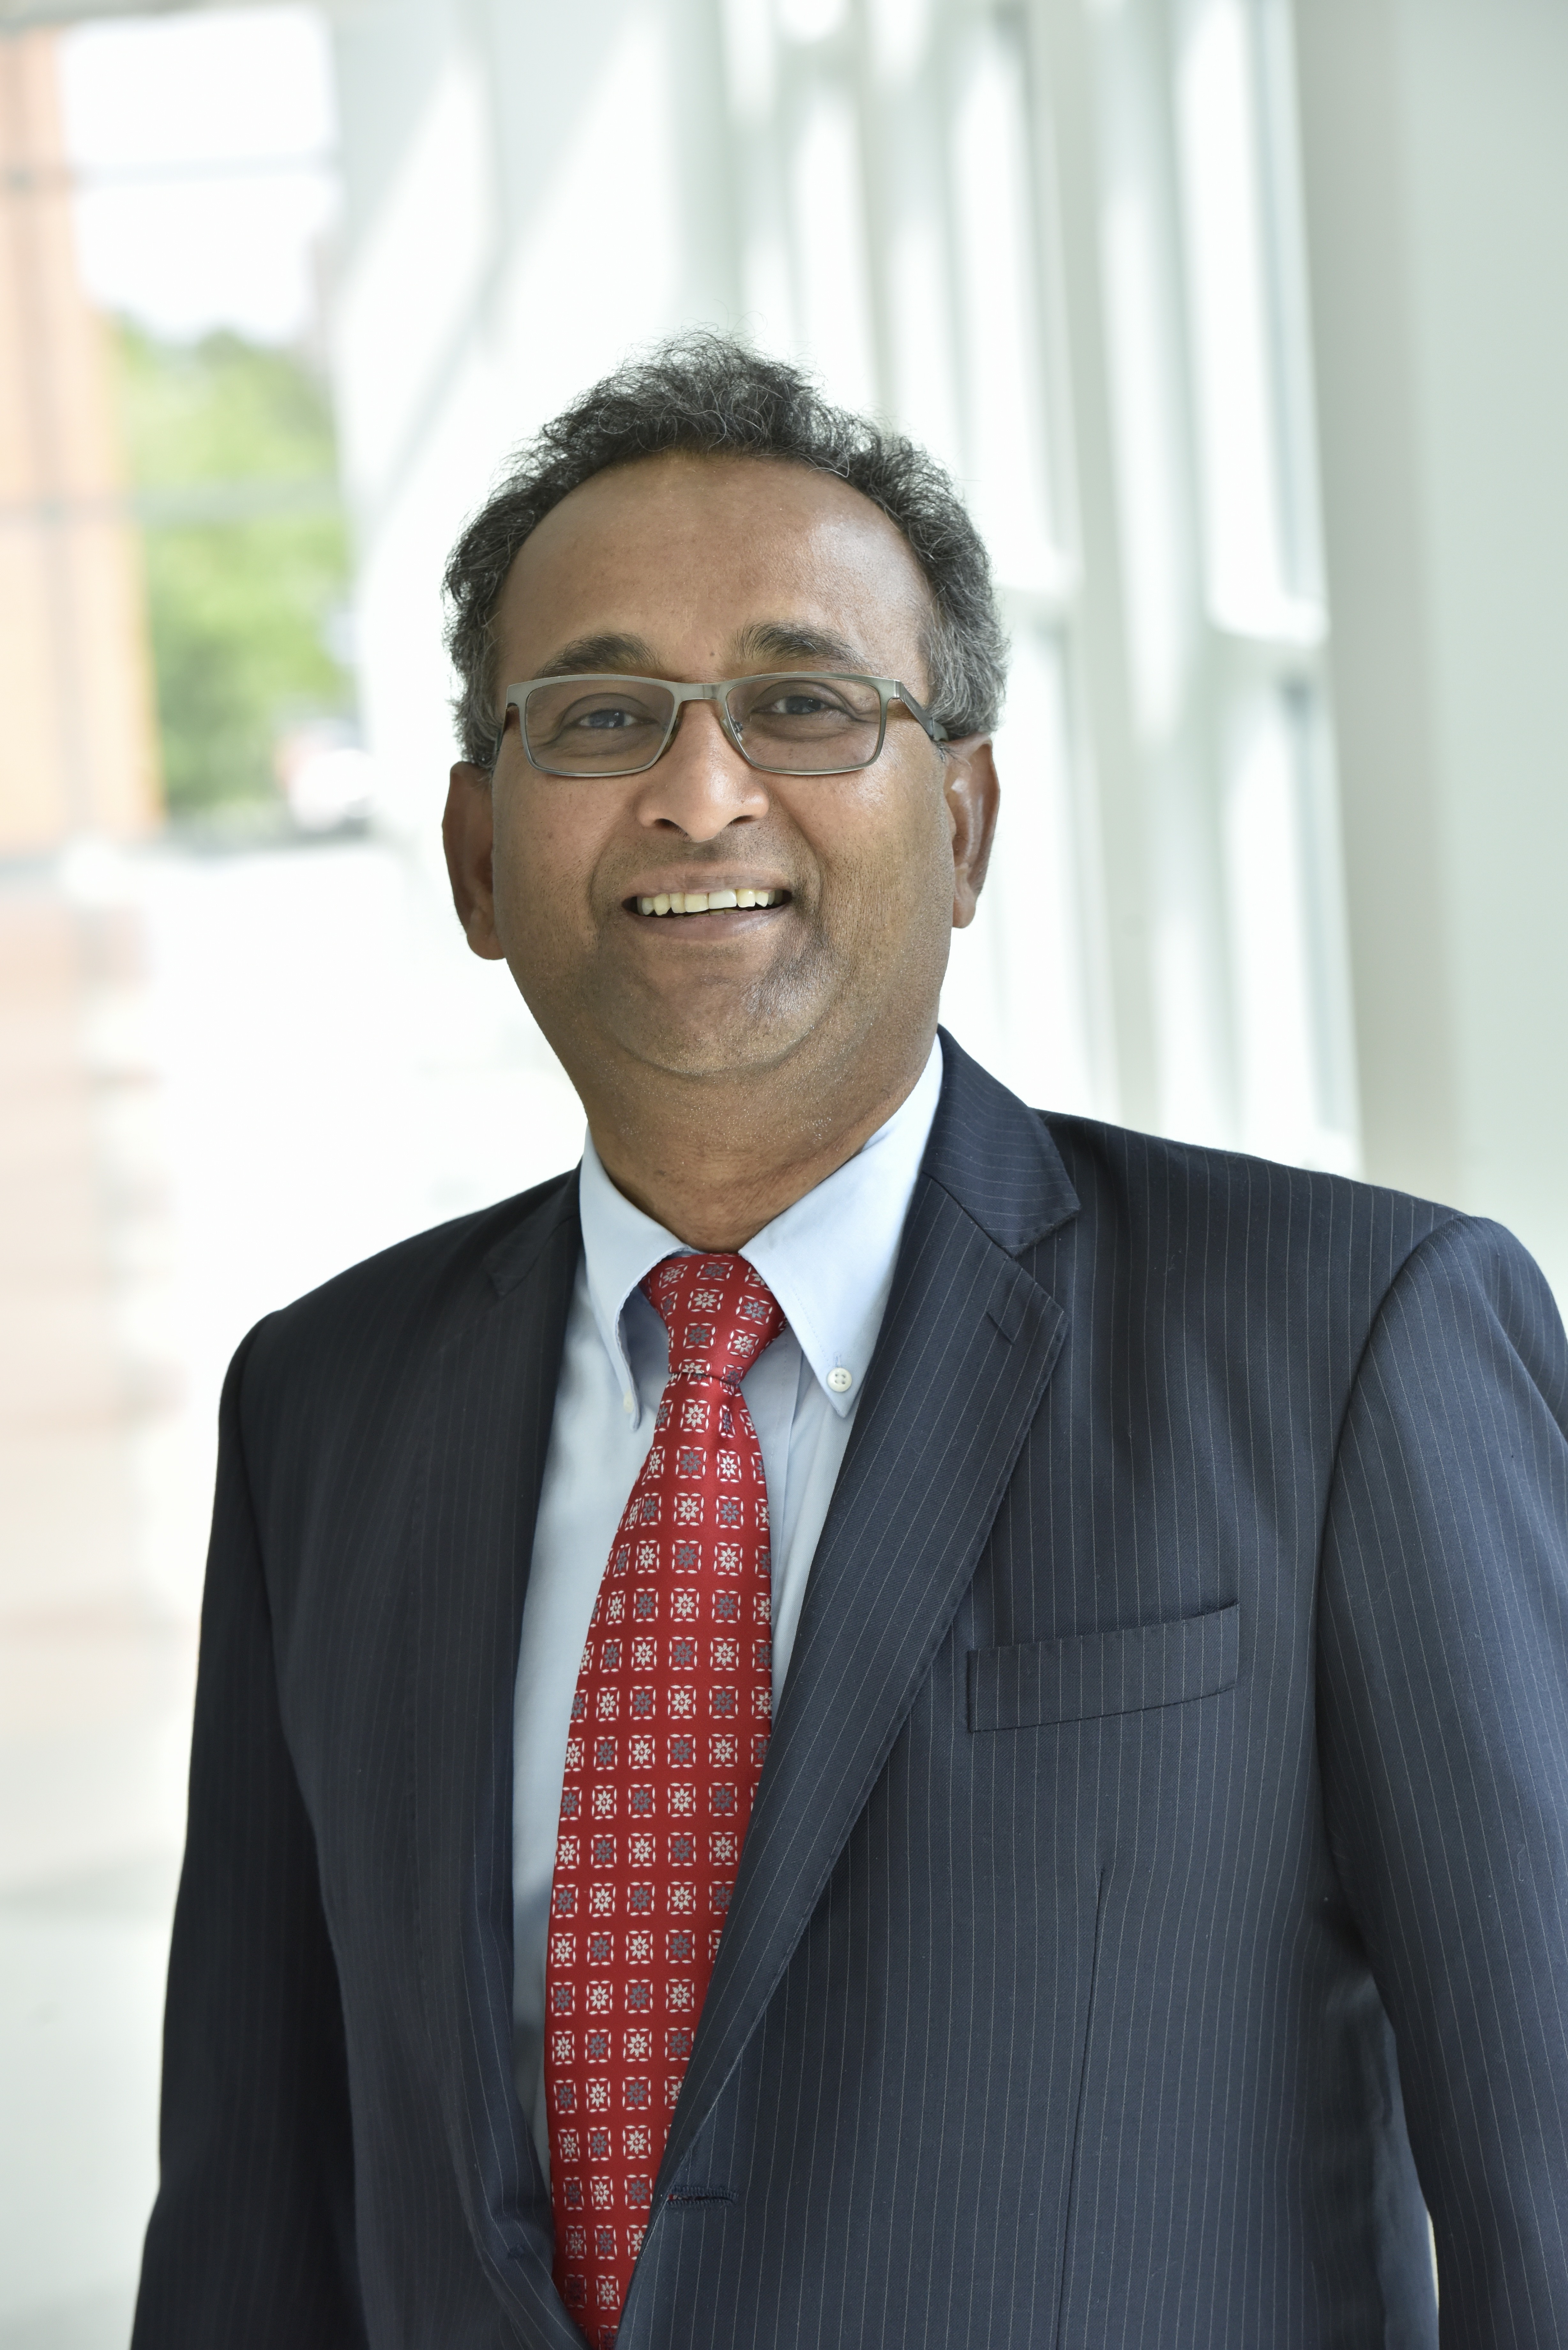 Charles Dhanaraj named Academic Director of the Doctor of Business Administration Program